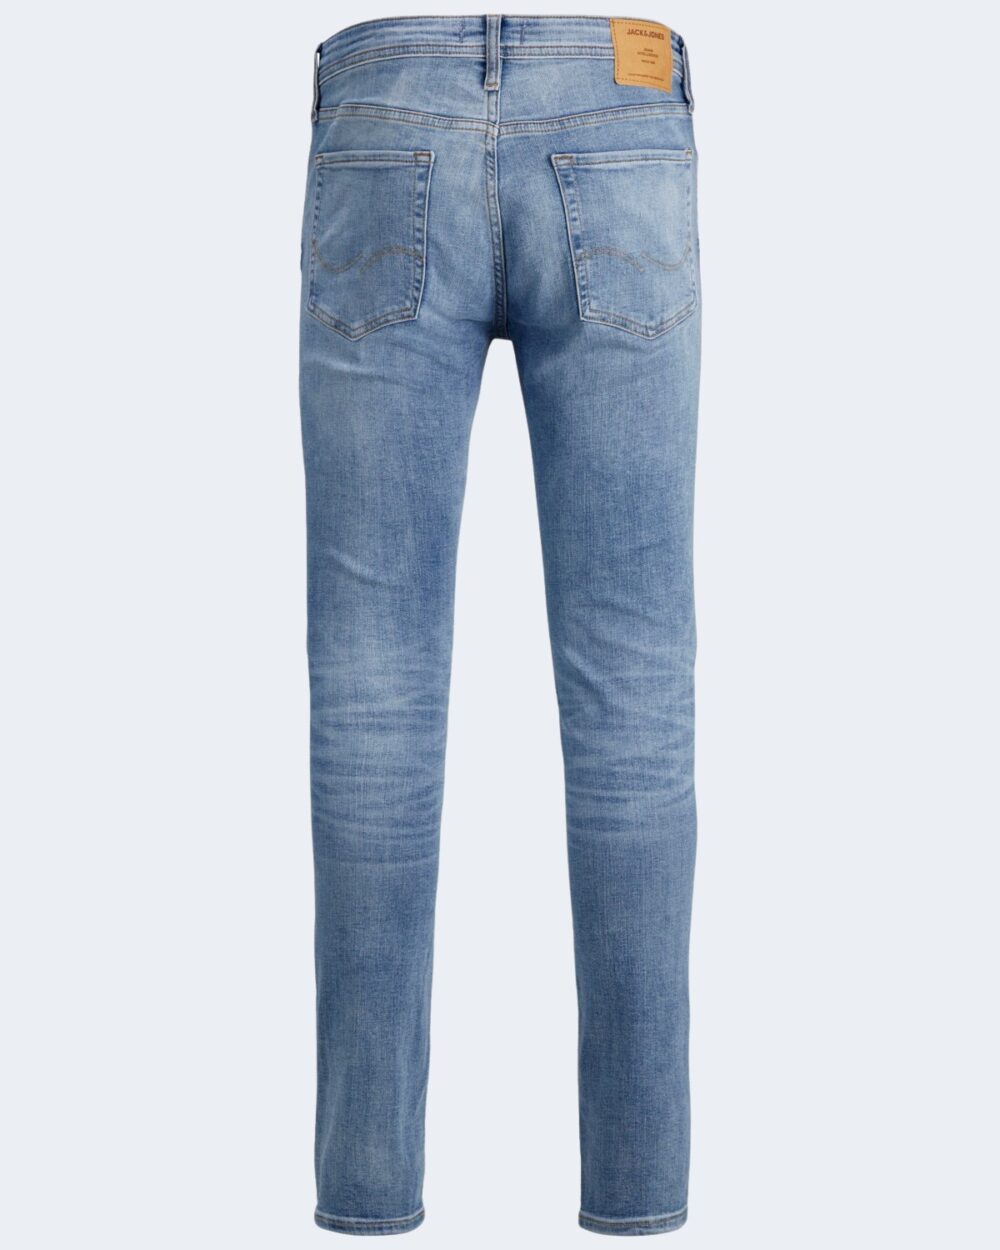 Jeans skinny Jack Jones liam original am792 50sps noos Denim - Foto 7